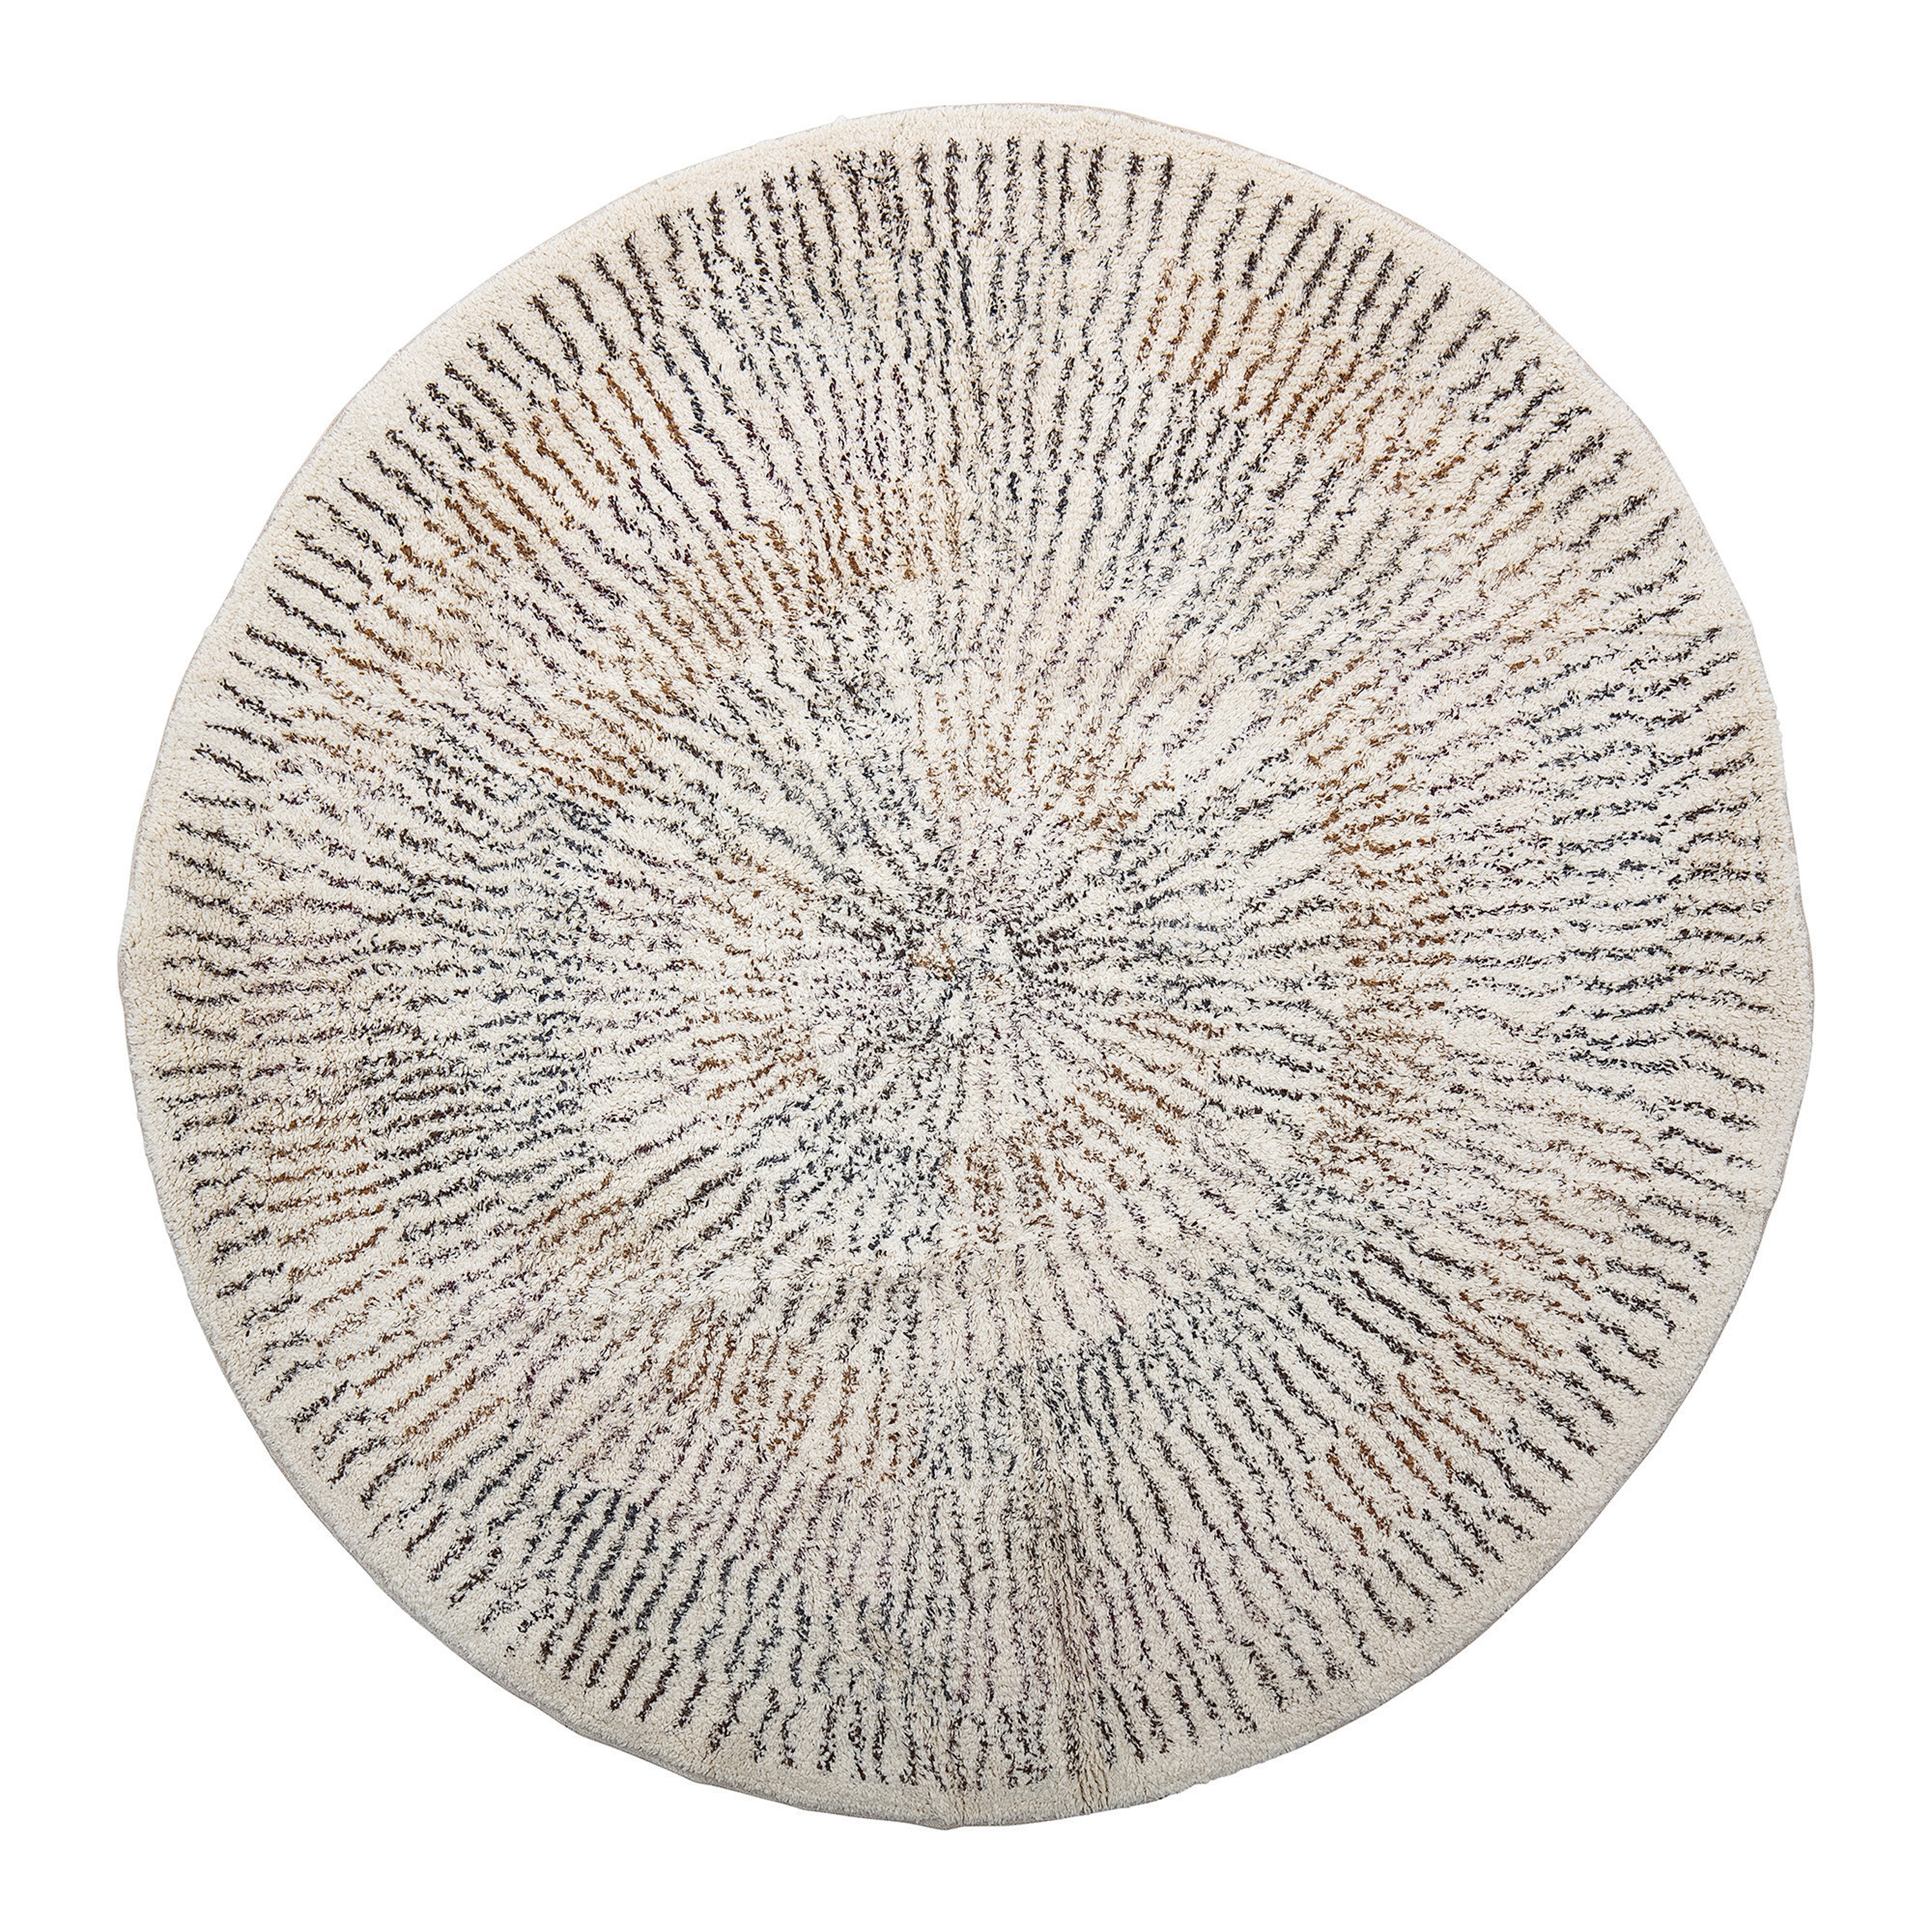 4' Round Cotton Printed Rug with Starburst Design - Image 0